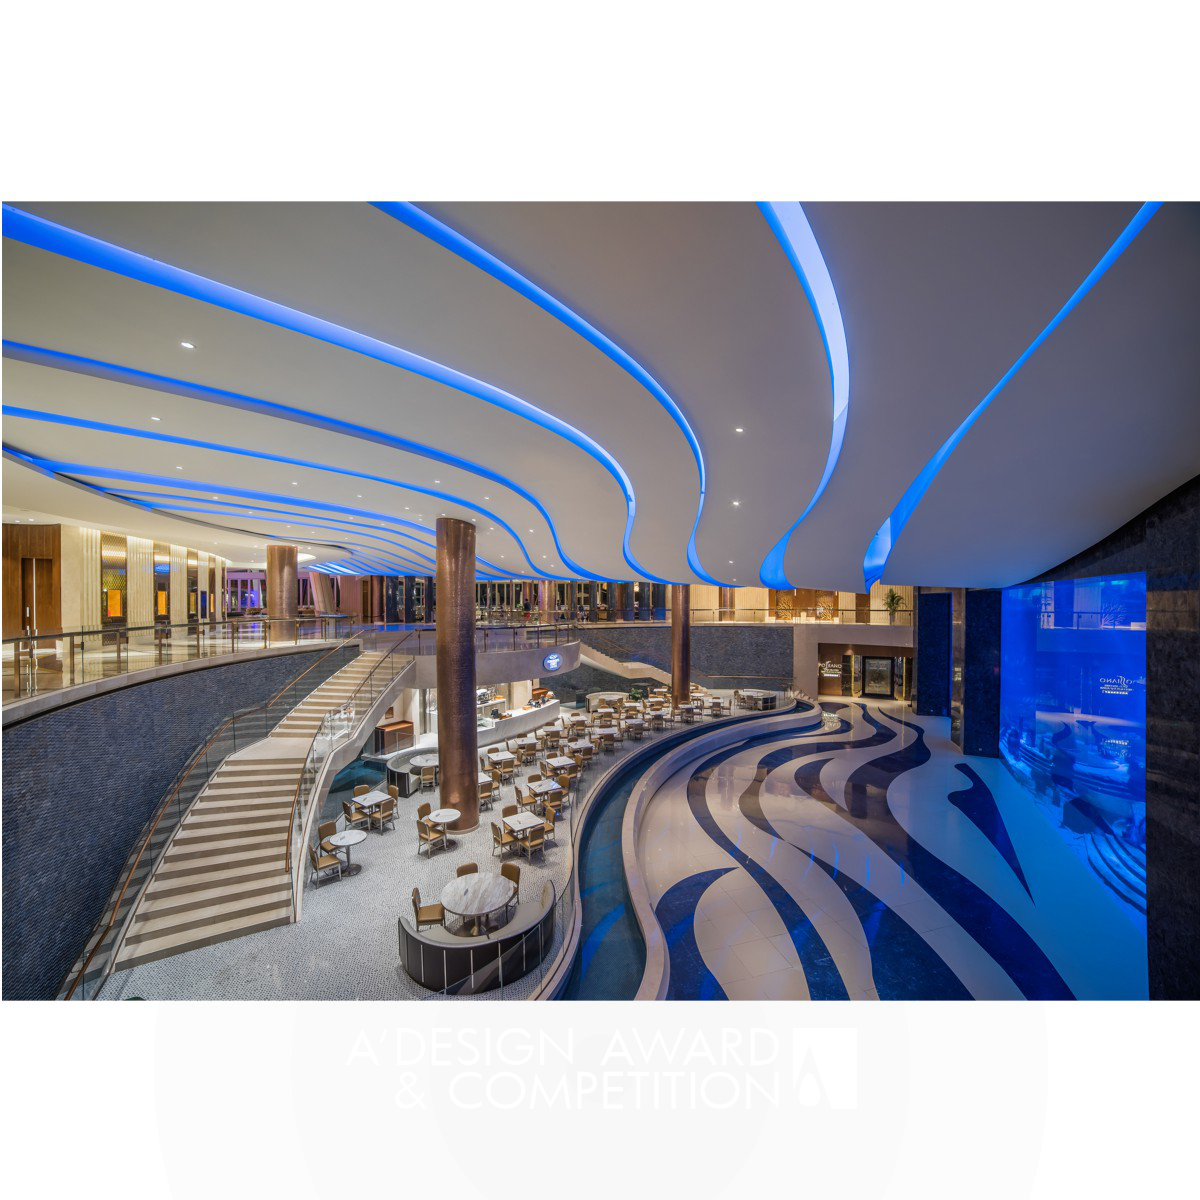 Atlantis Sanya Resort by ATG - Asiantime International Construction Silver Engineering, Construction and Infrastructure Design Award Winner 2019 